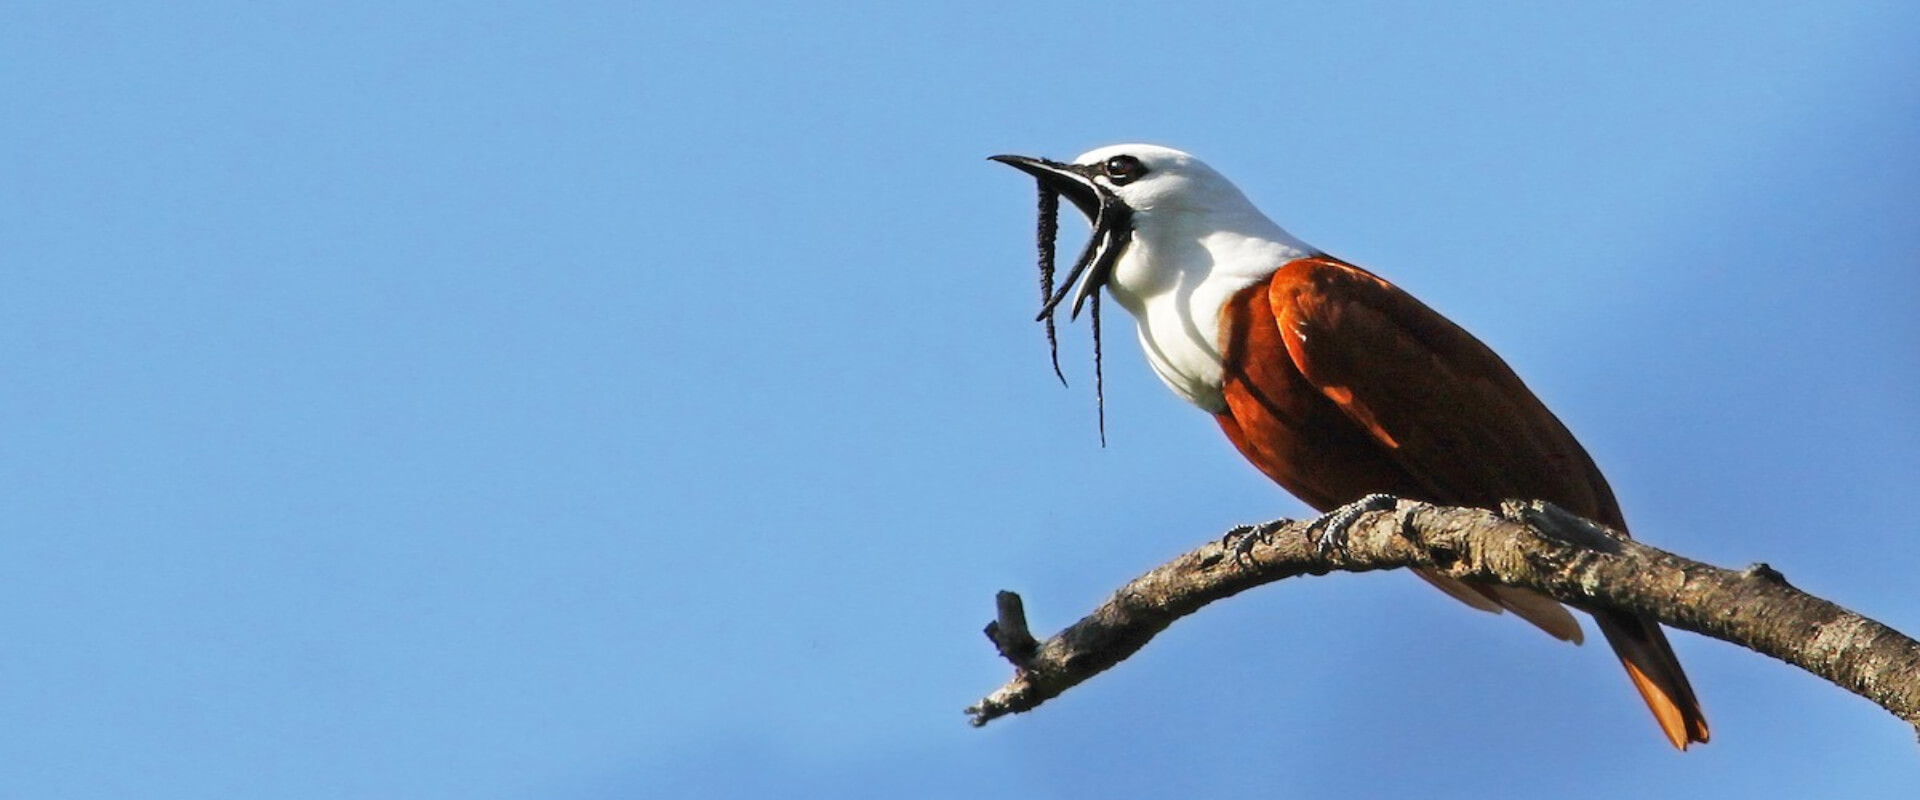 Observación de aves Curicancha | Costa Rica Jade Tours